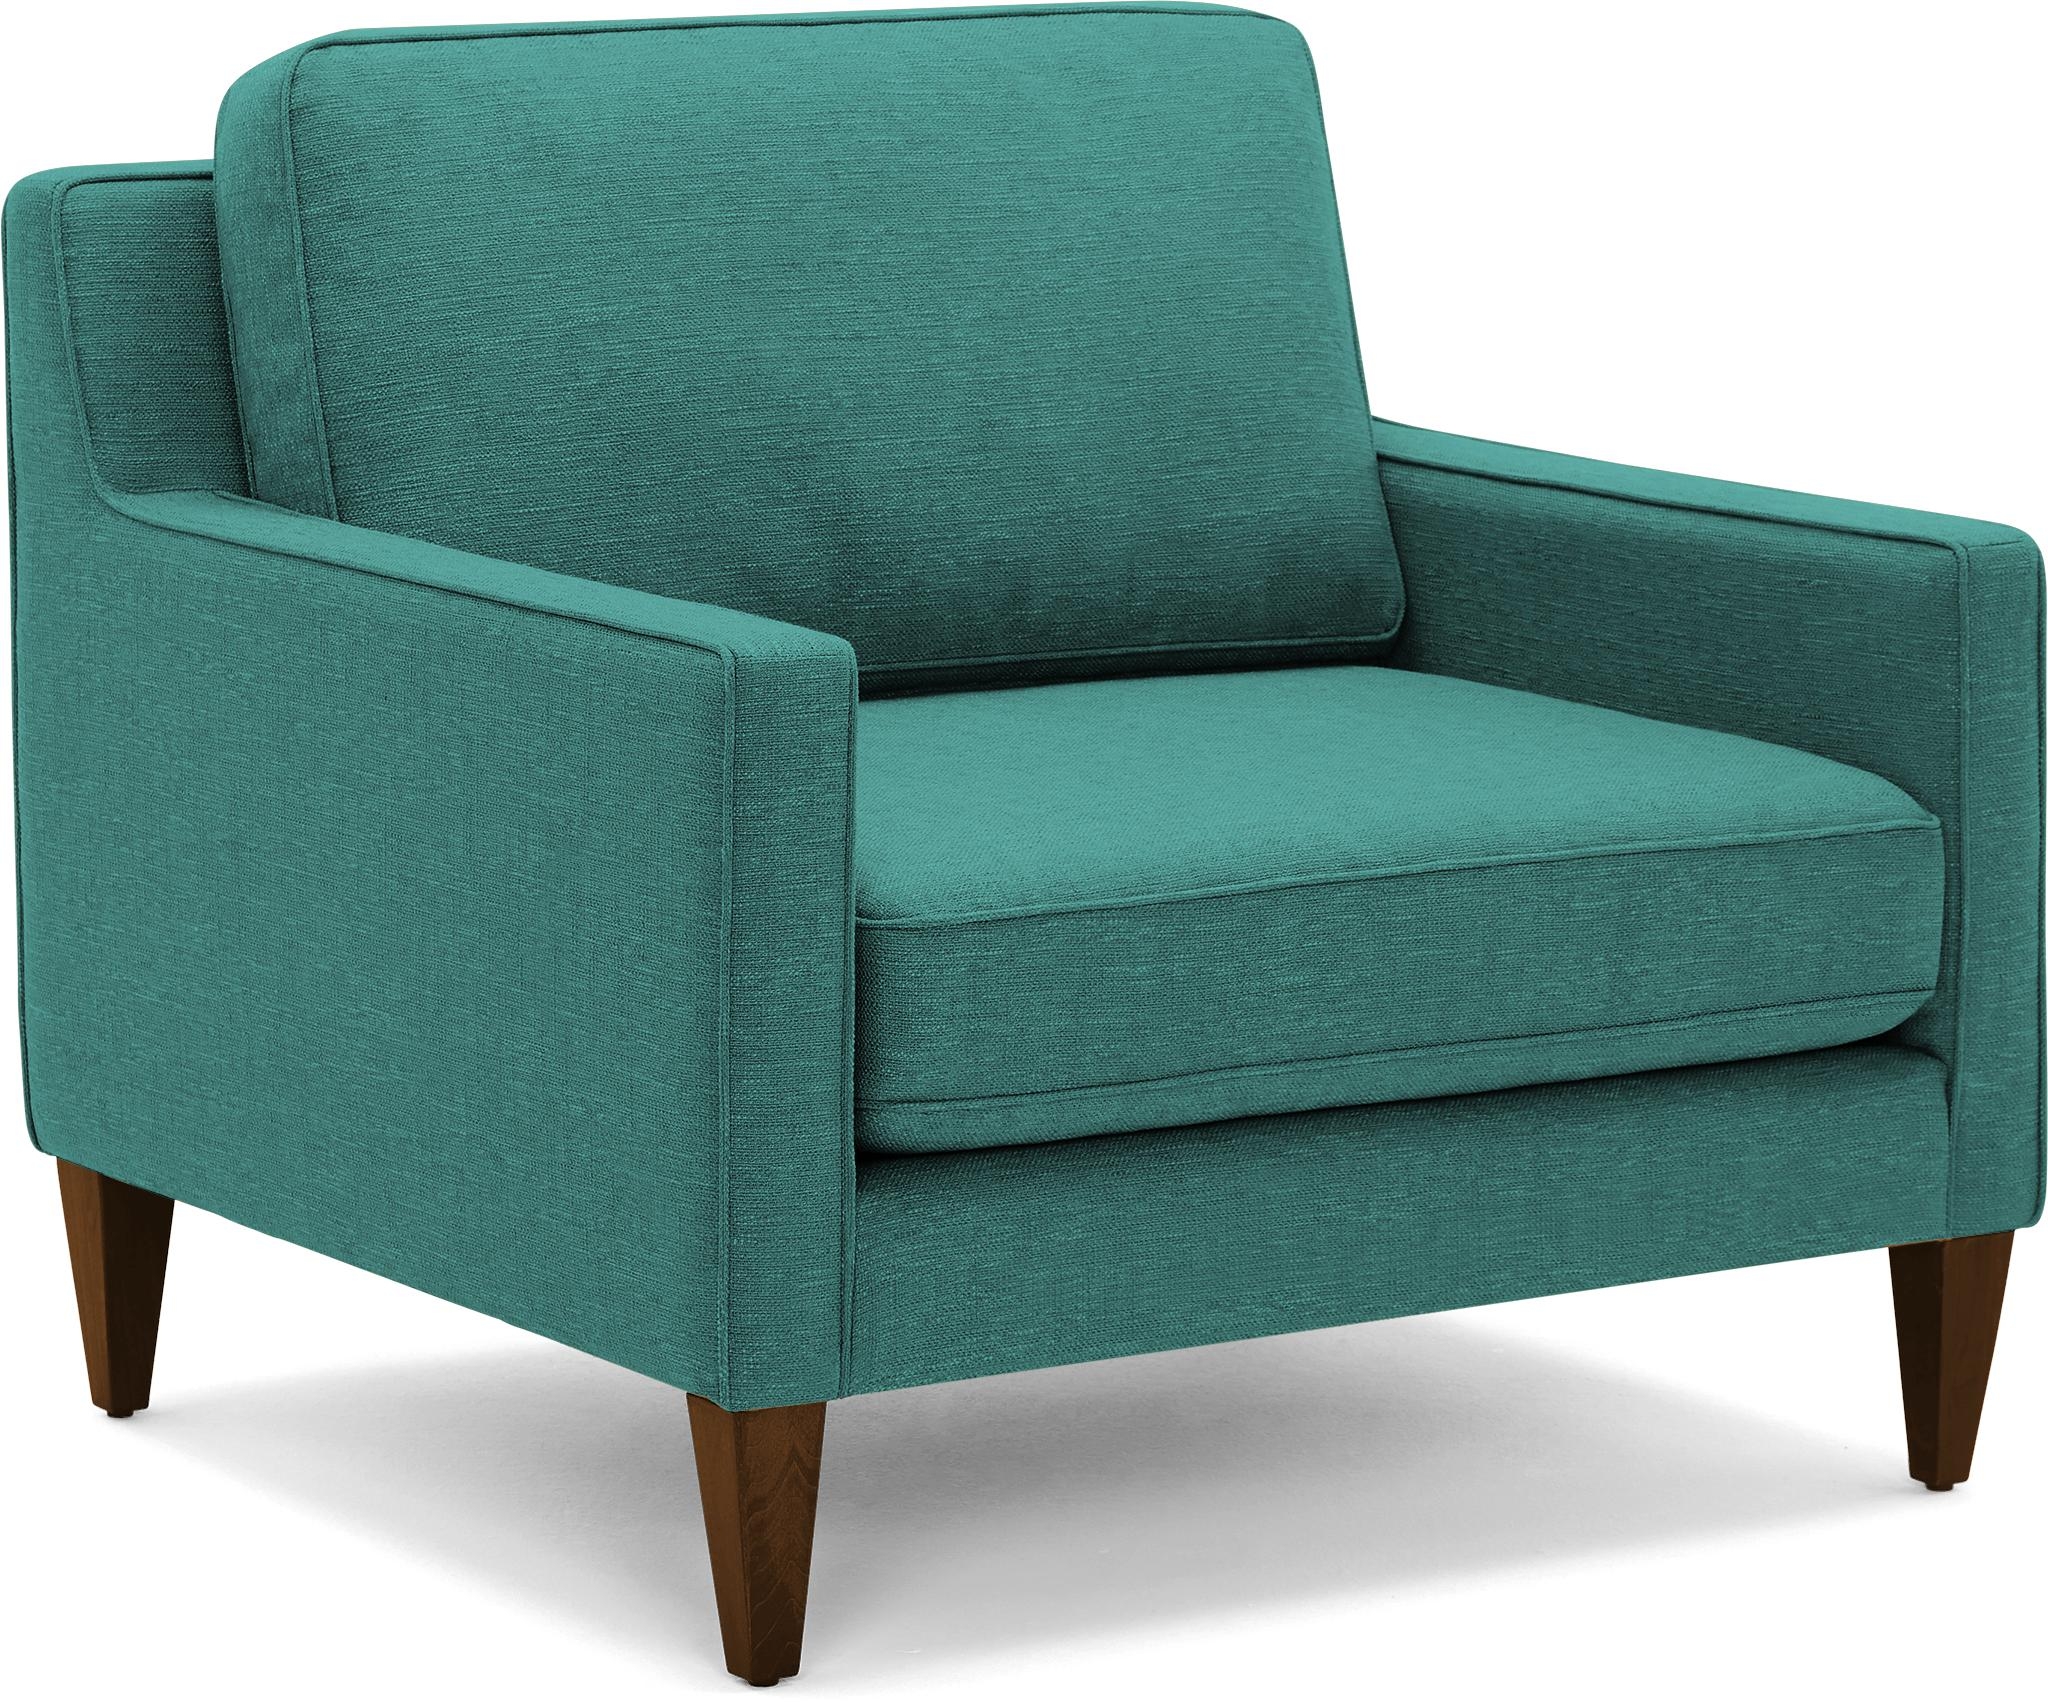 Green Levi Mid Century Modern Chair - Essence Aqua - Mocha - Image 1